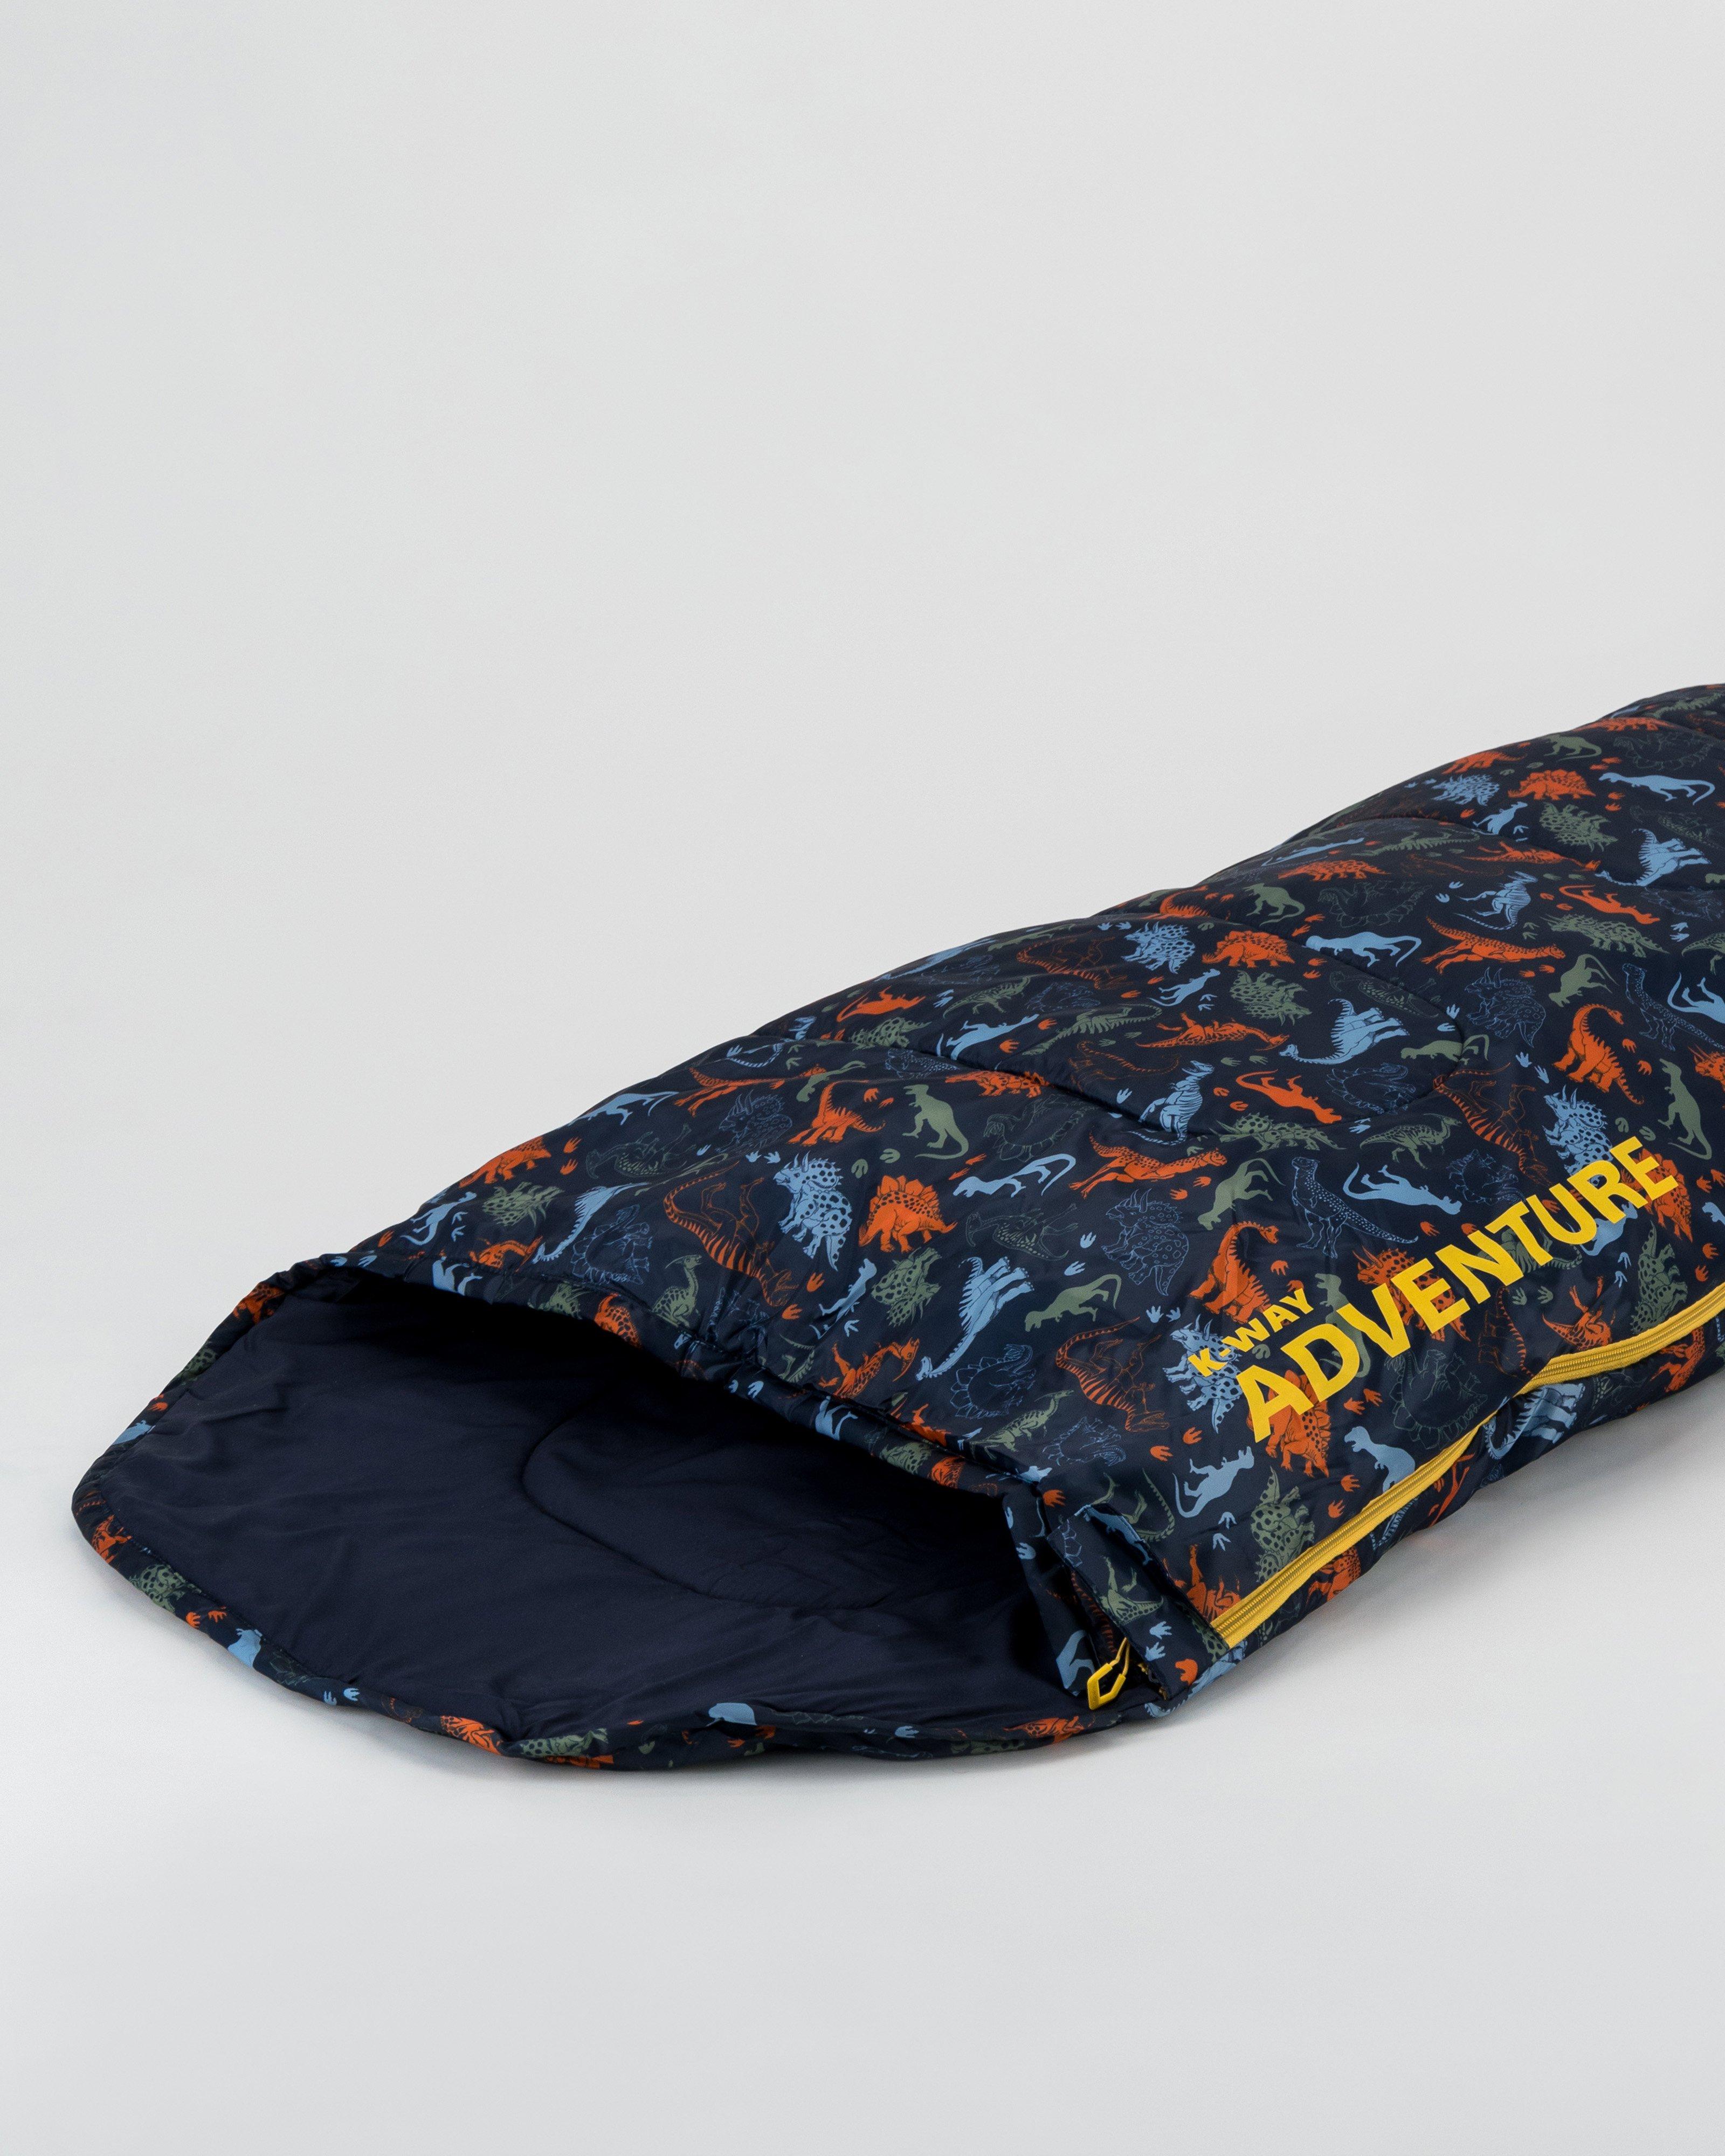 K-Way Kids Printed Adventurer Sleeping Bag -  Navy